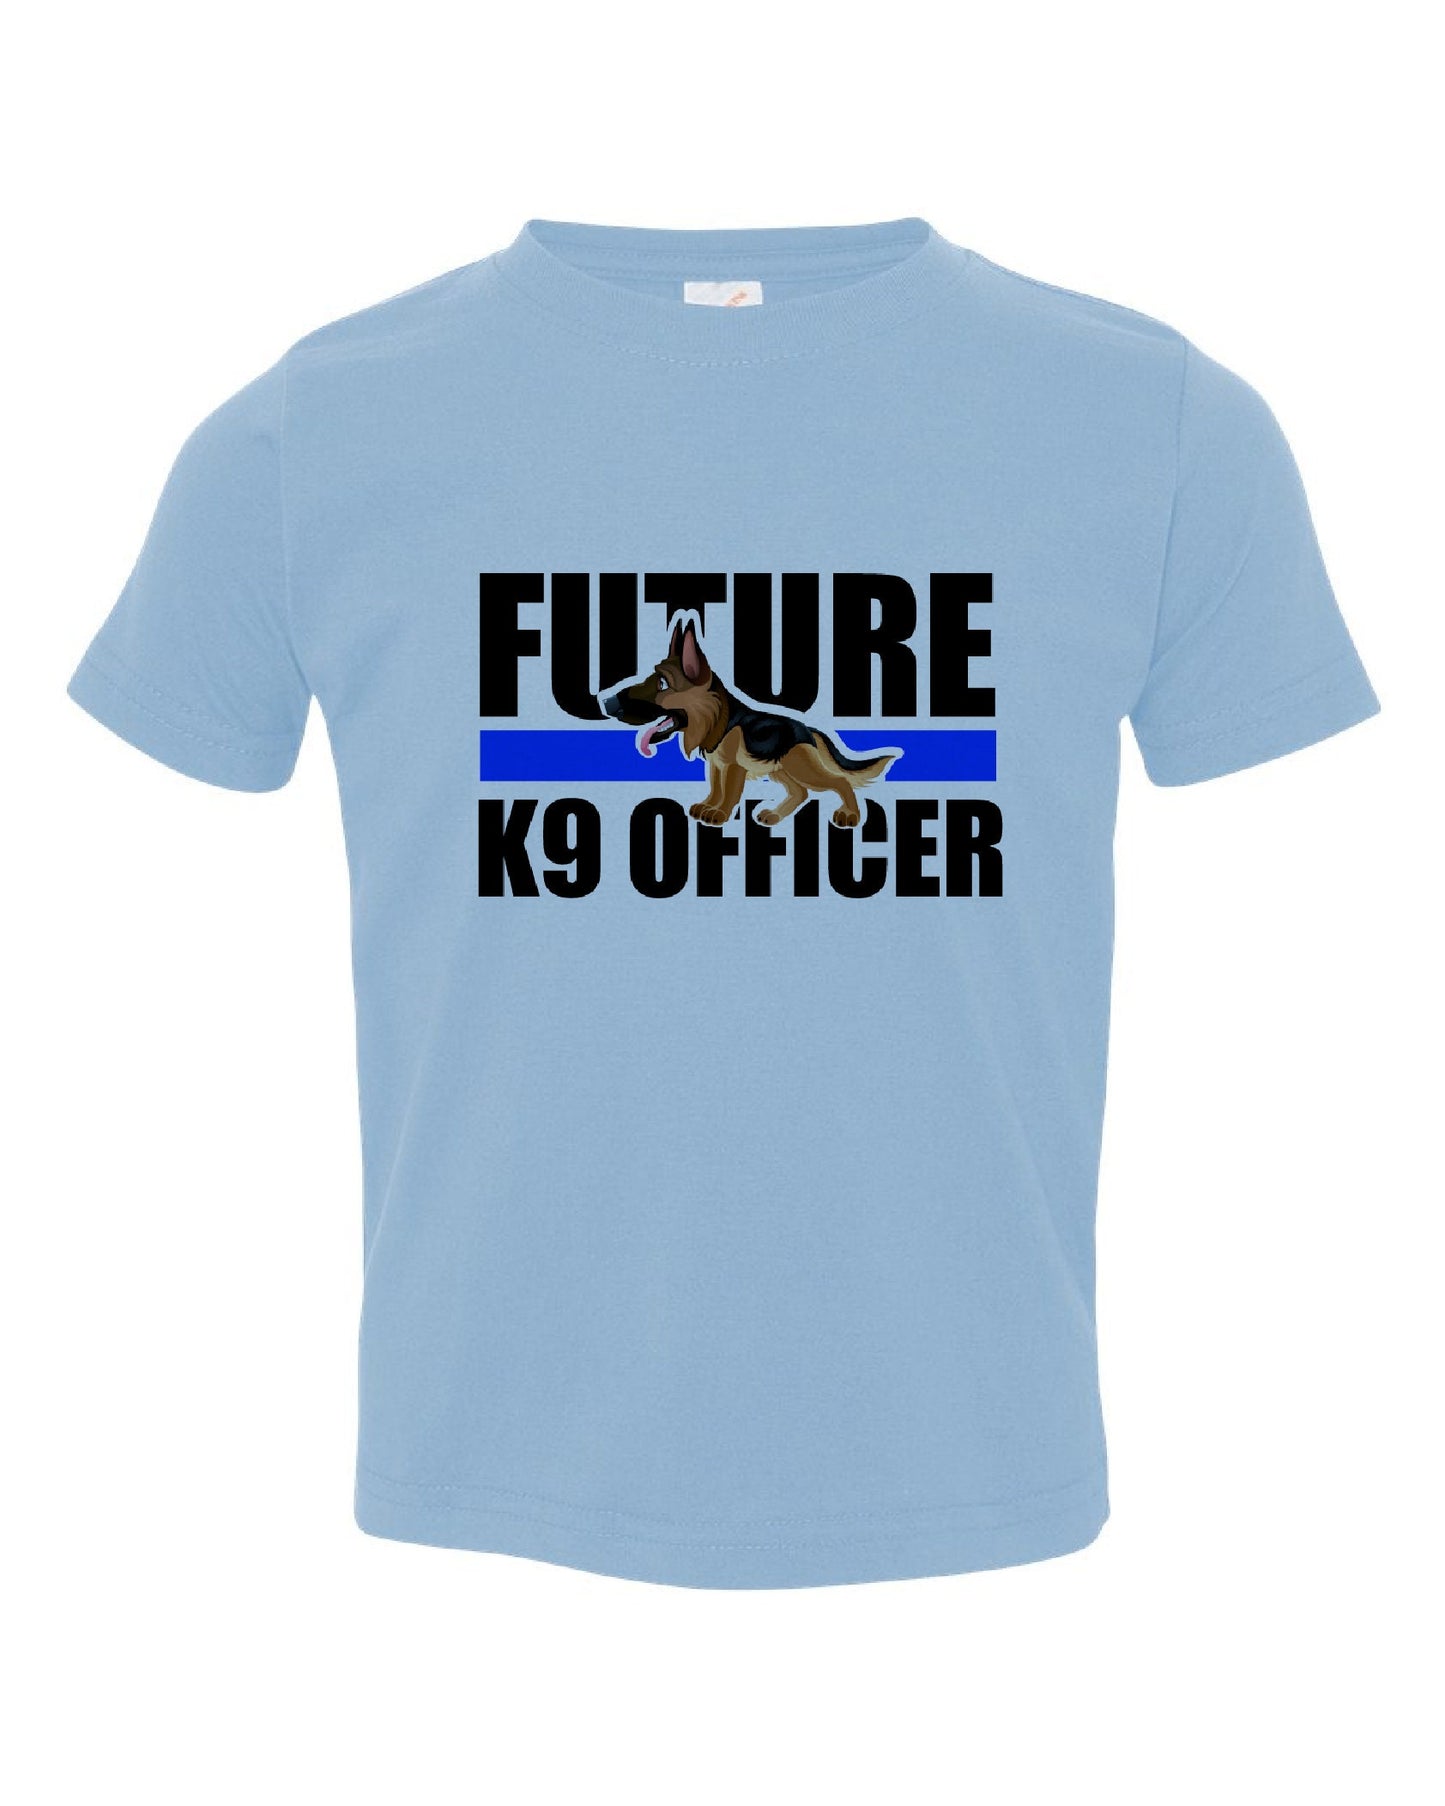 Future K9 Officer, Kid's K9 T-Shirt, Police K9 T-Shirt